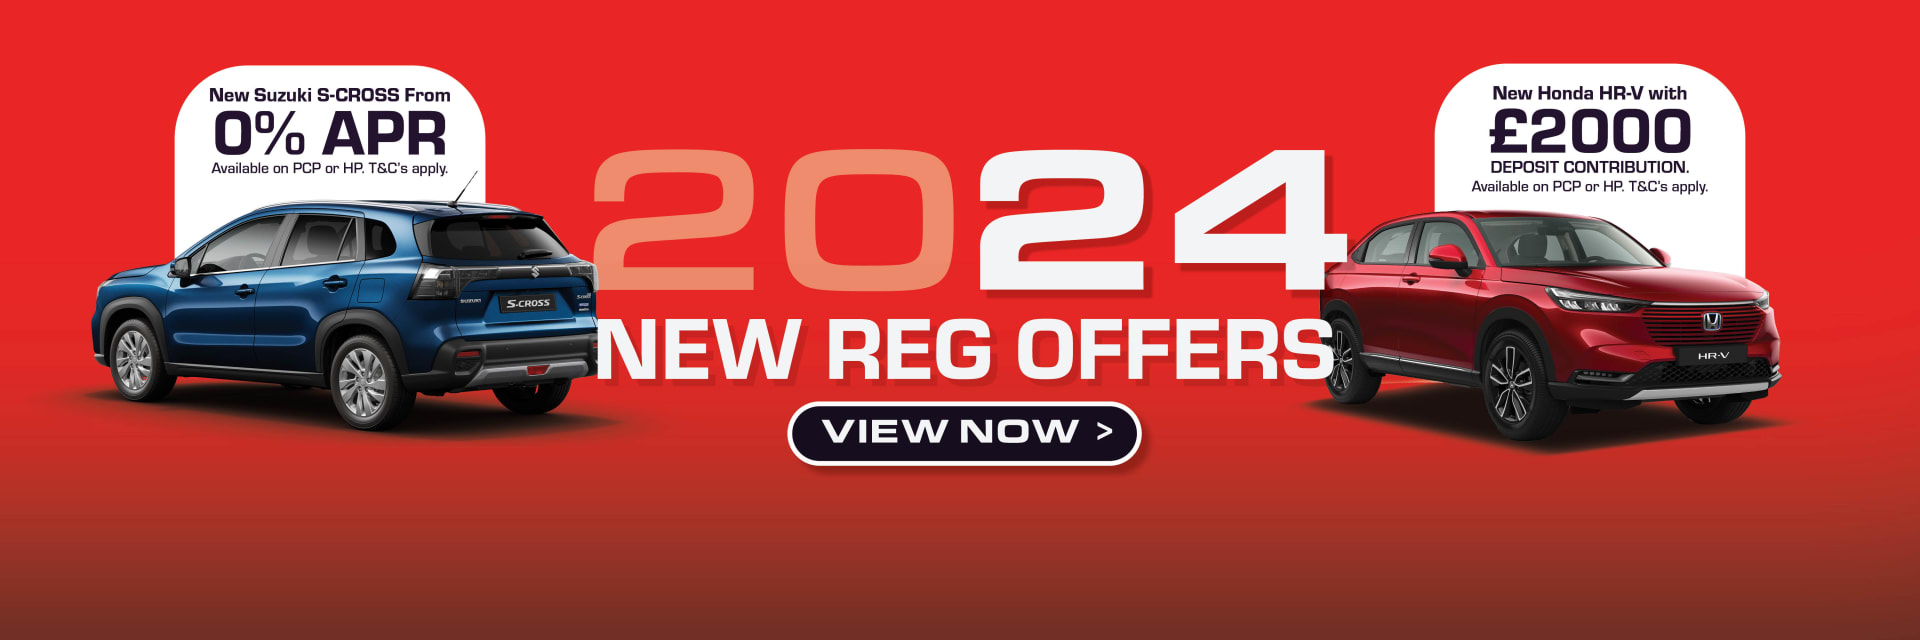 New 2024 Reg Offers